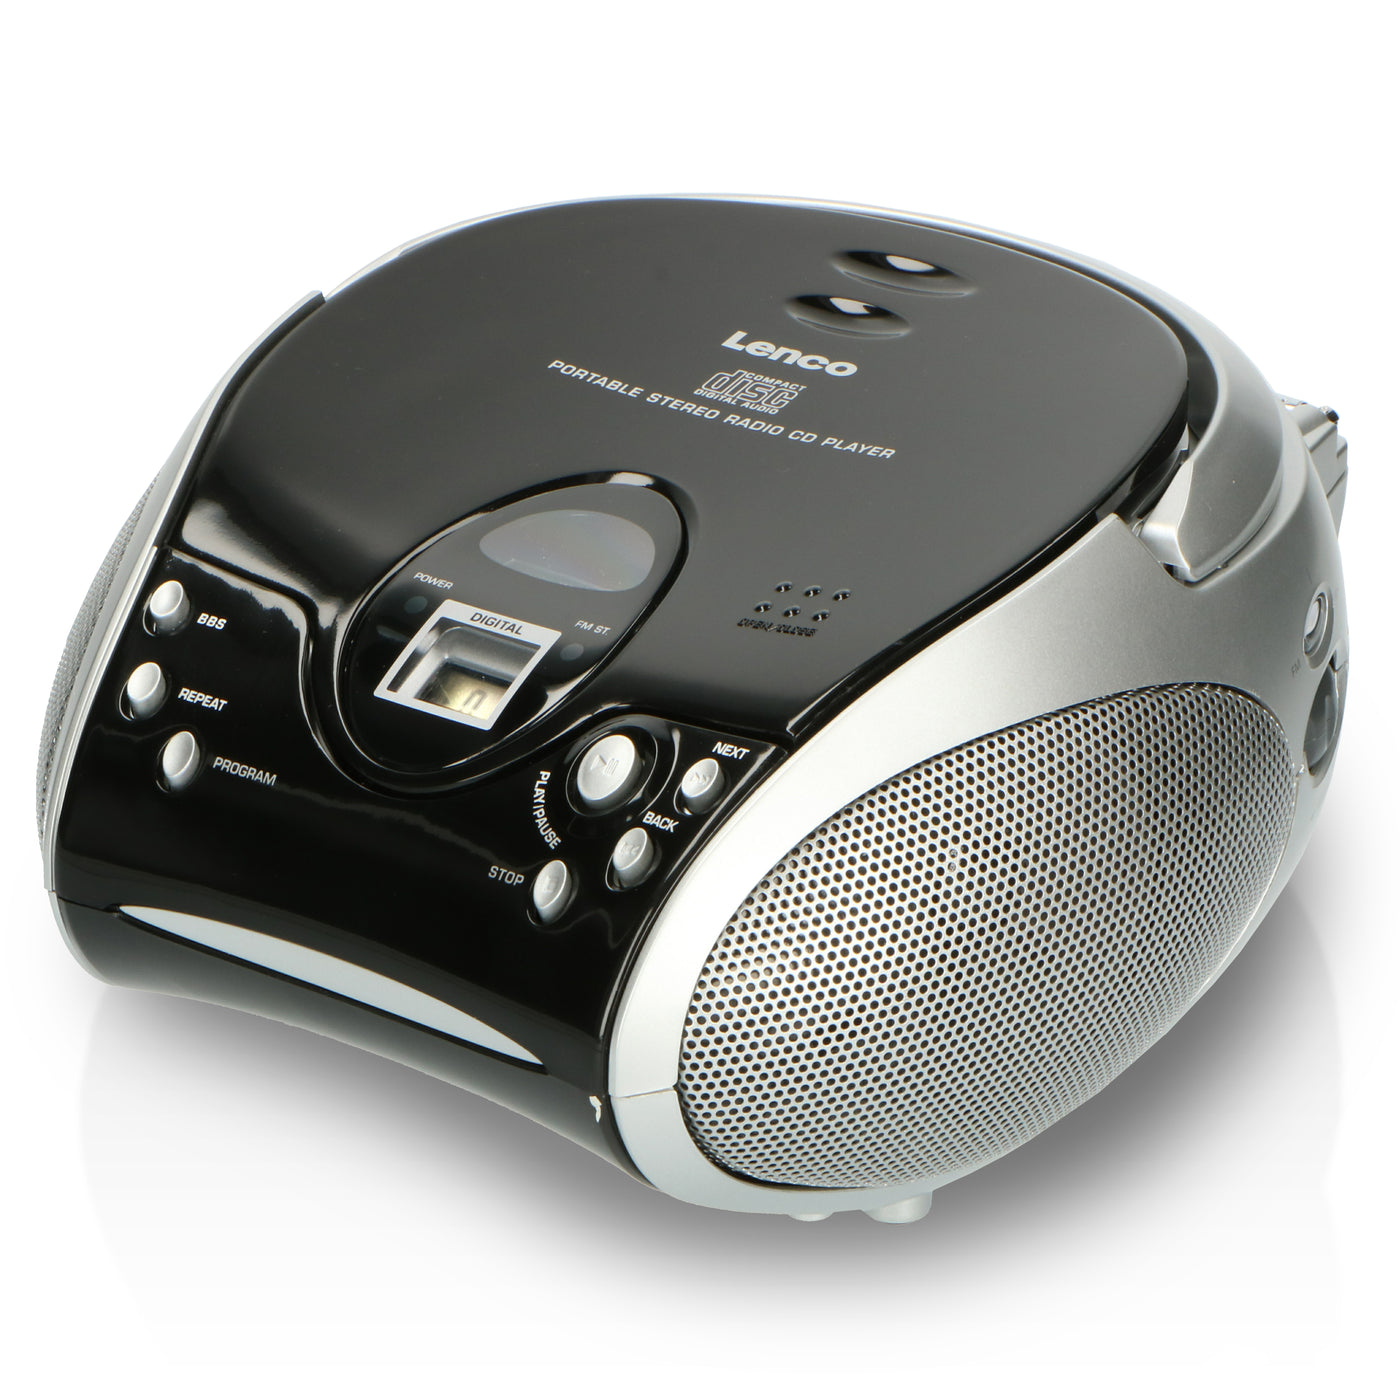 LENCO SCD-24 Black/Silver - Portable stereo FM radio with CD player - –  Lenco-Catalog